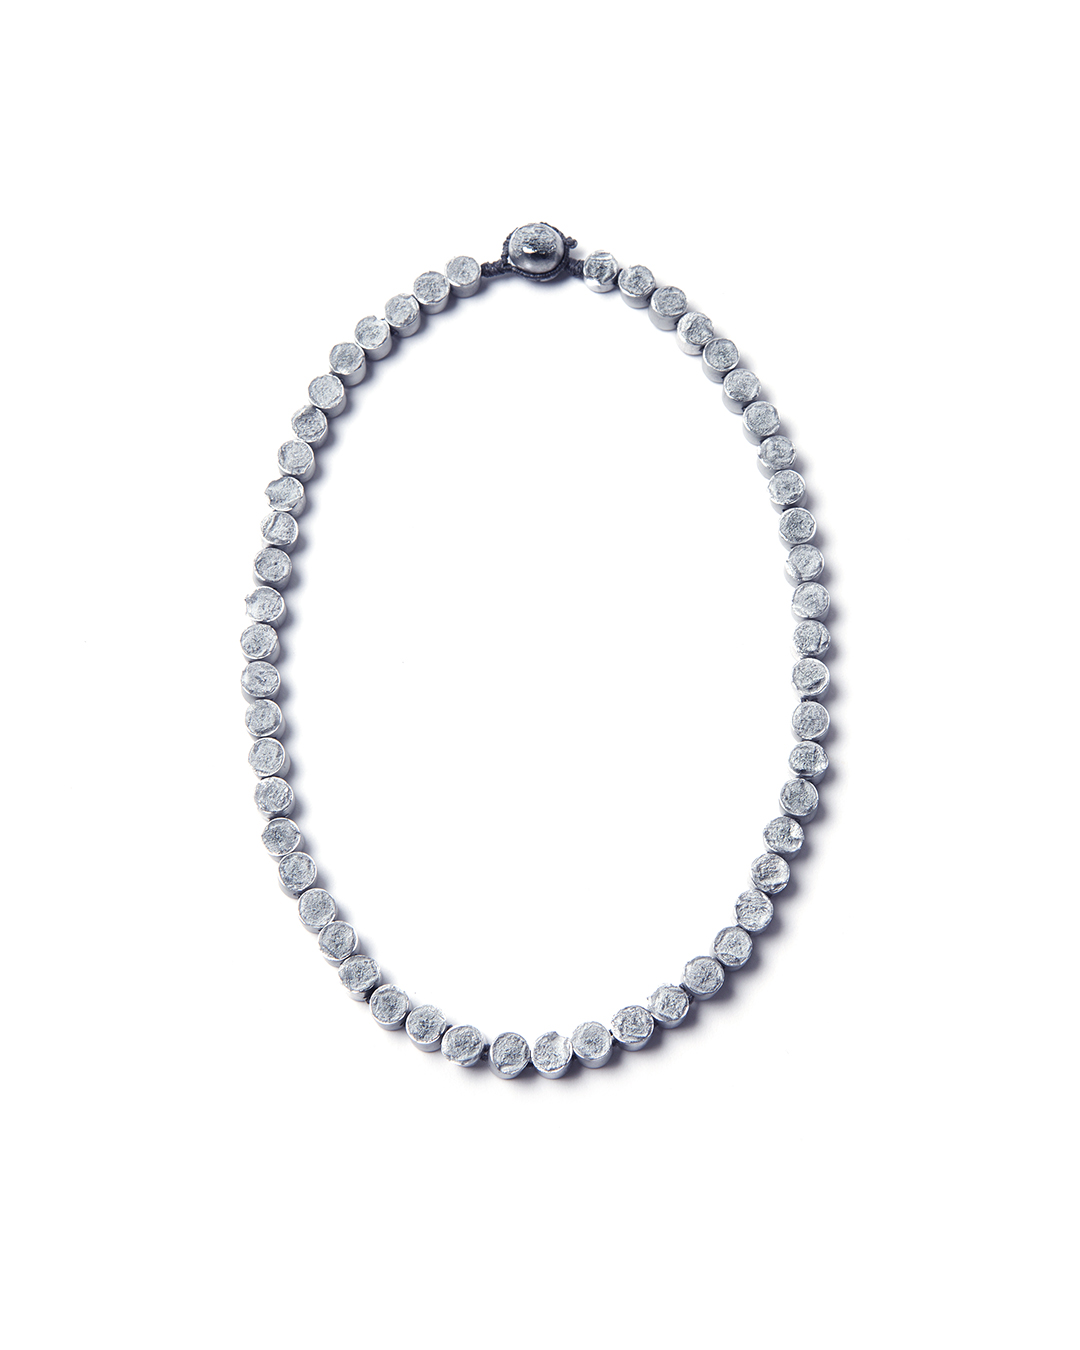 Barbara Schrobenhauser, Fractures II - Like a Pearl Necklace, 2015, halsketting; aluminium, touw, 480 mm, €1090